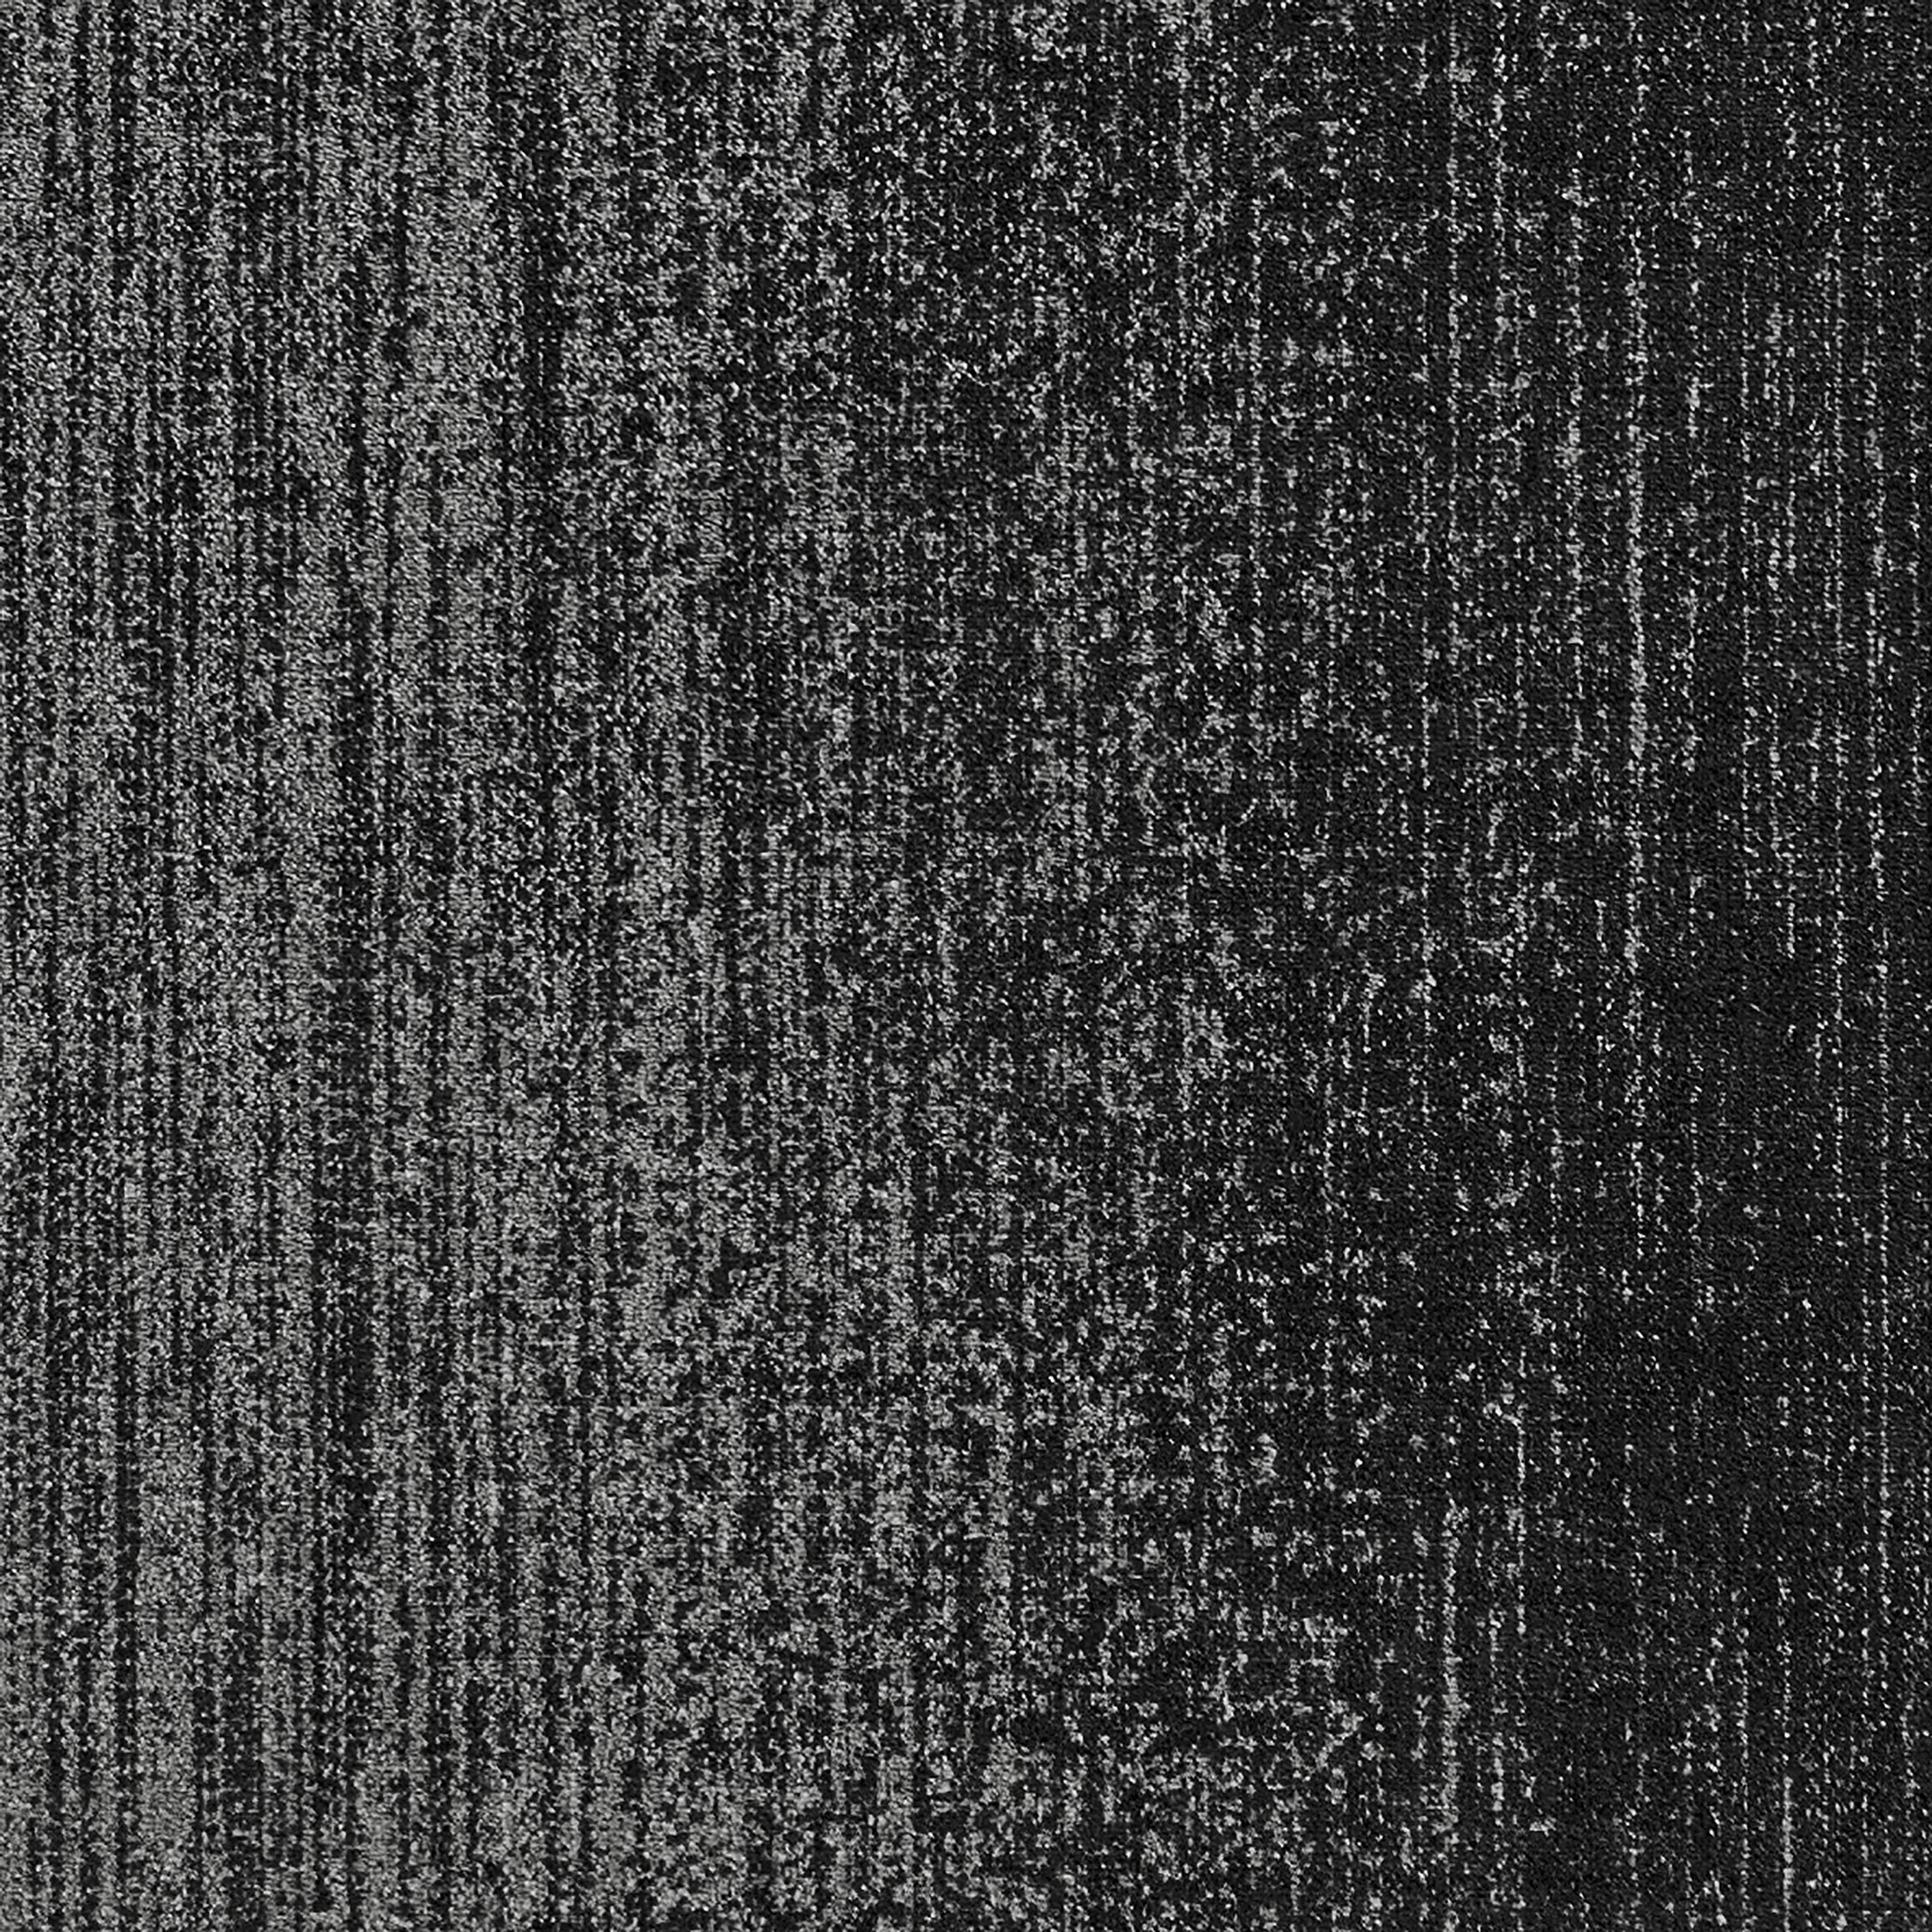 ReForm Radiant Mix steel grey/black 96x96